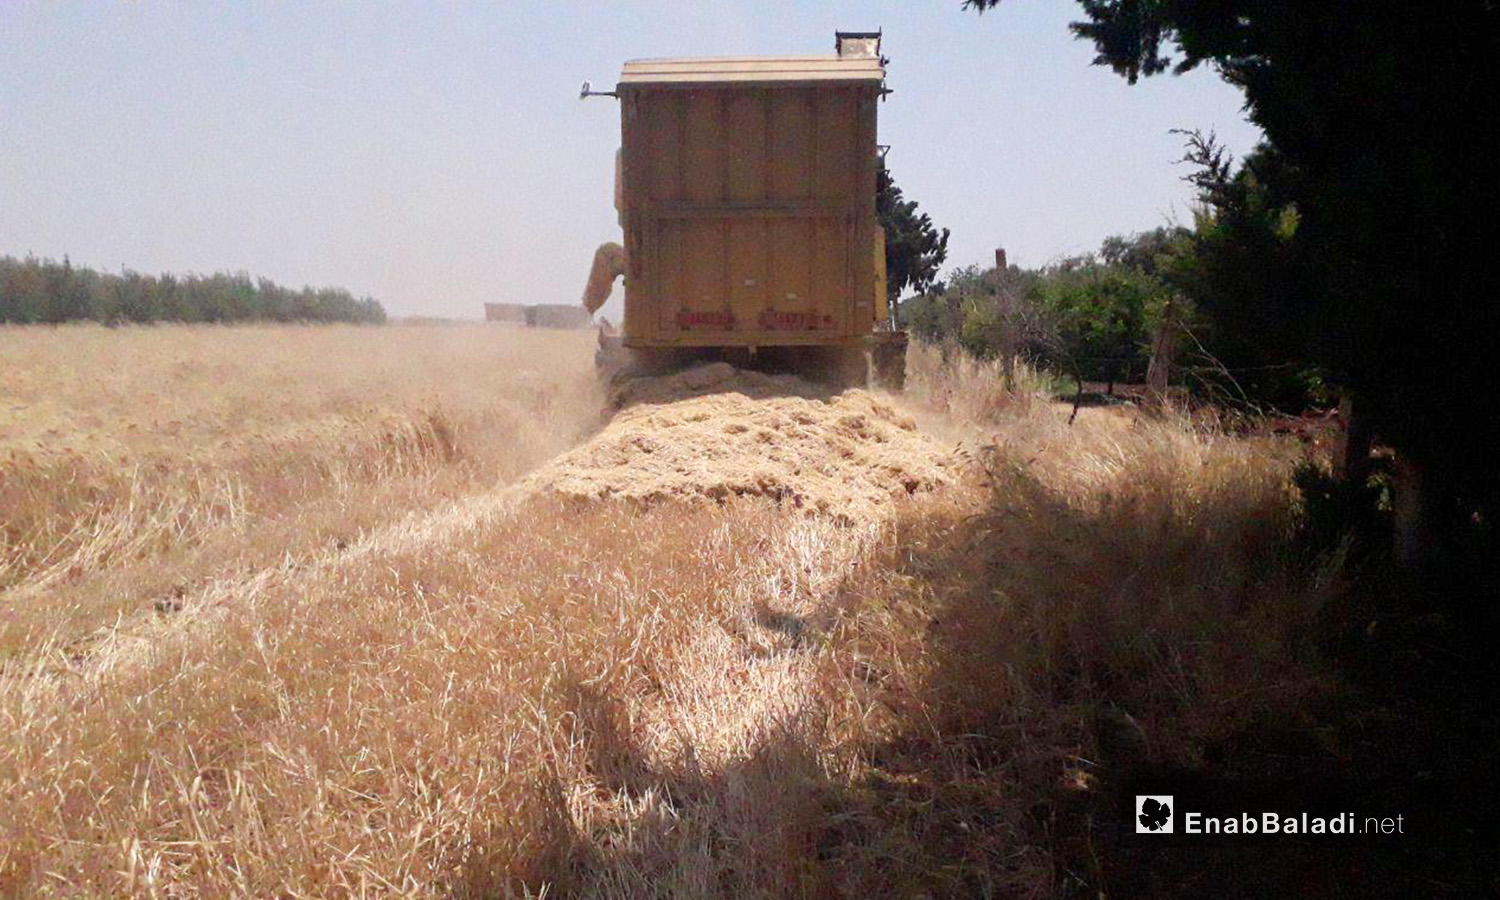 A combine harvesting wheat in western Daraa countryside – 05 July 2020 (Enab Baladi / Halim Mohammed)